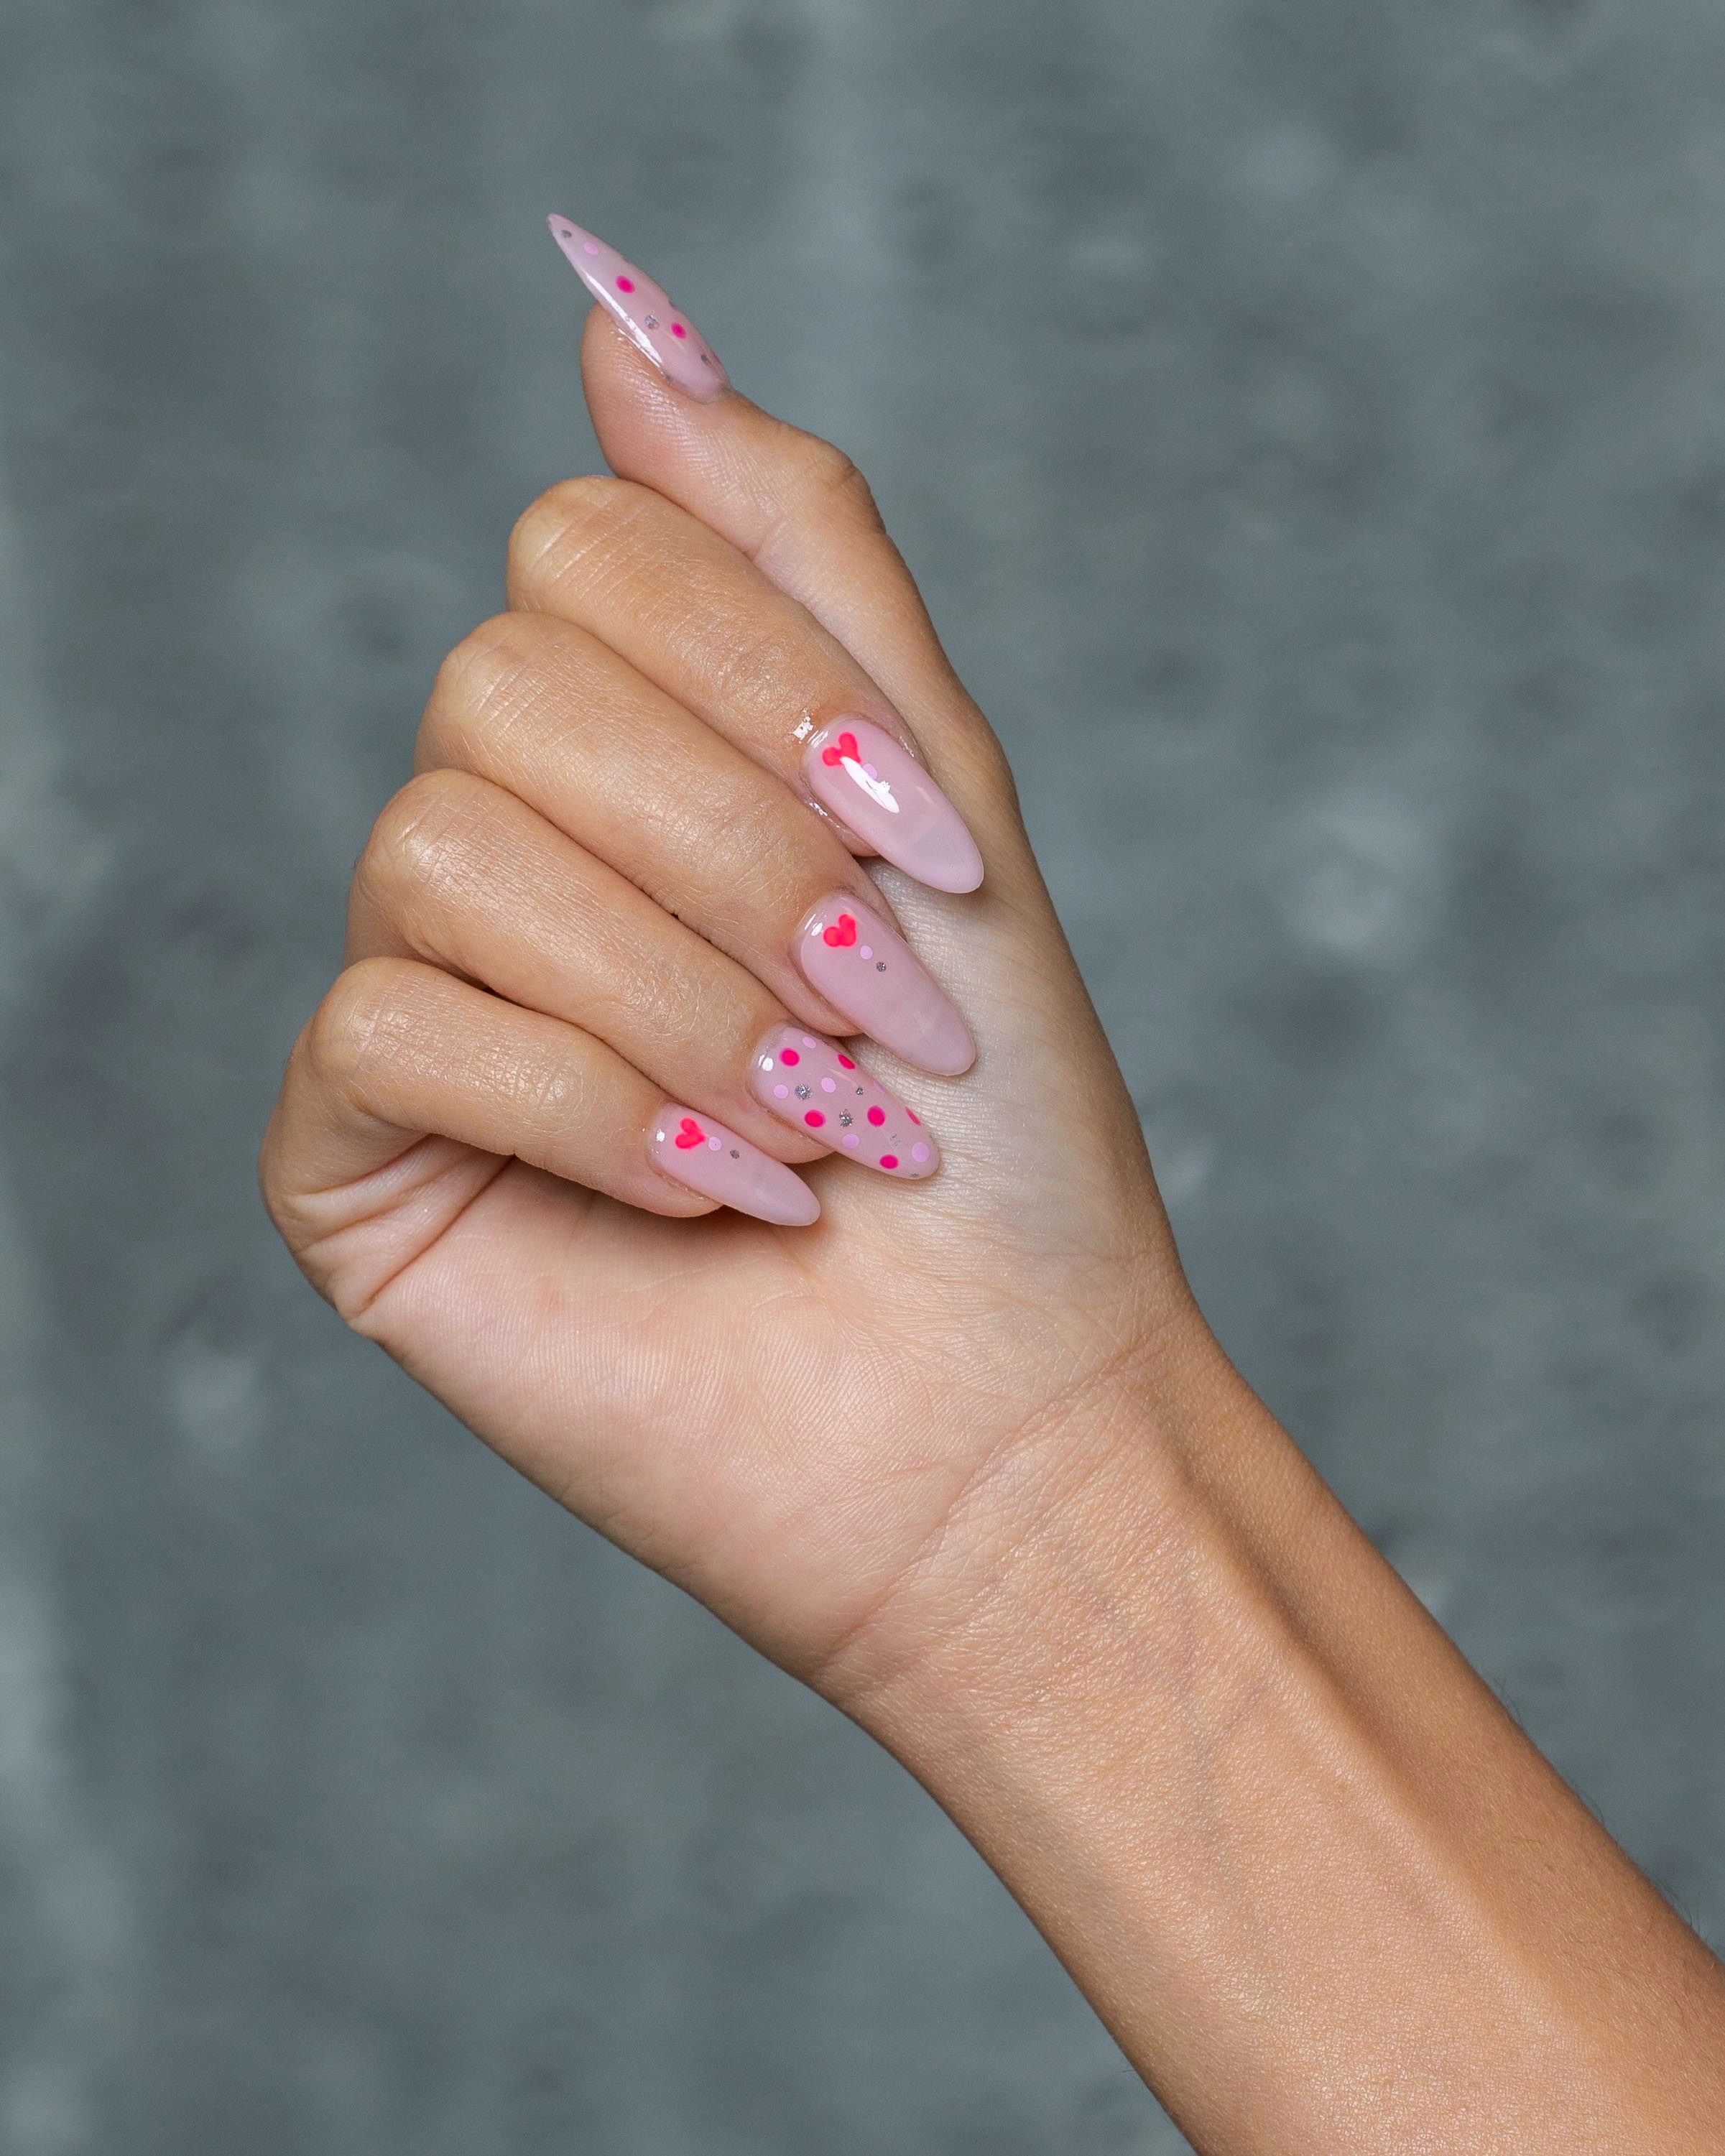 bellacures nail artists, polka dot pink heart design